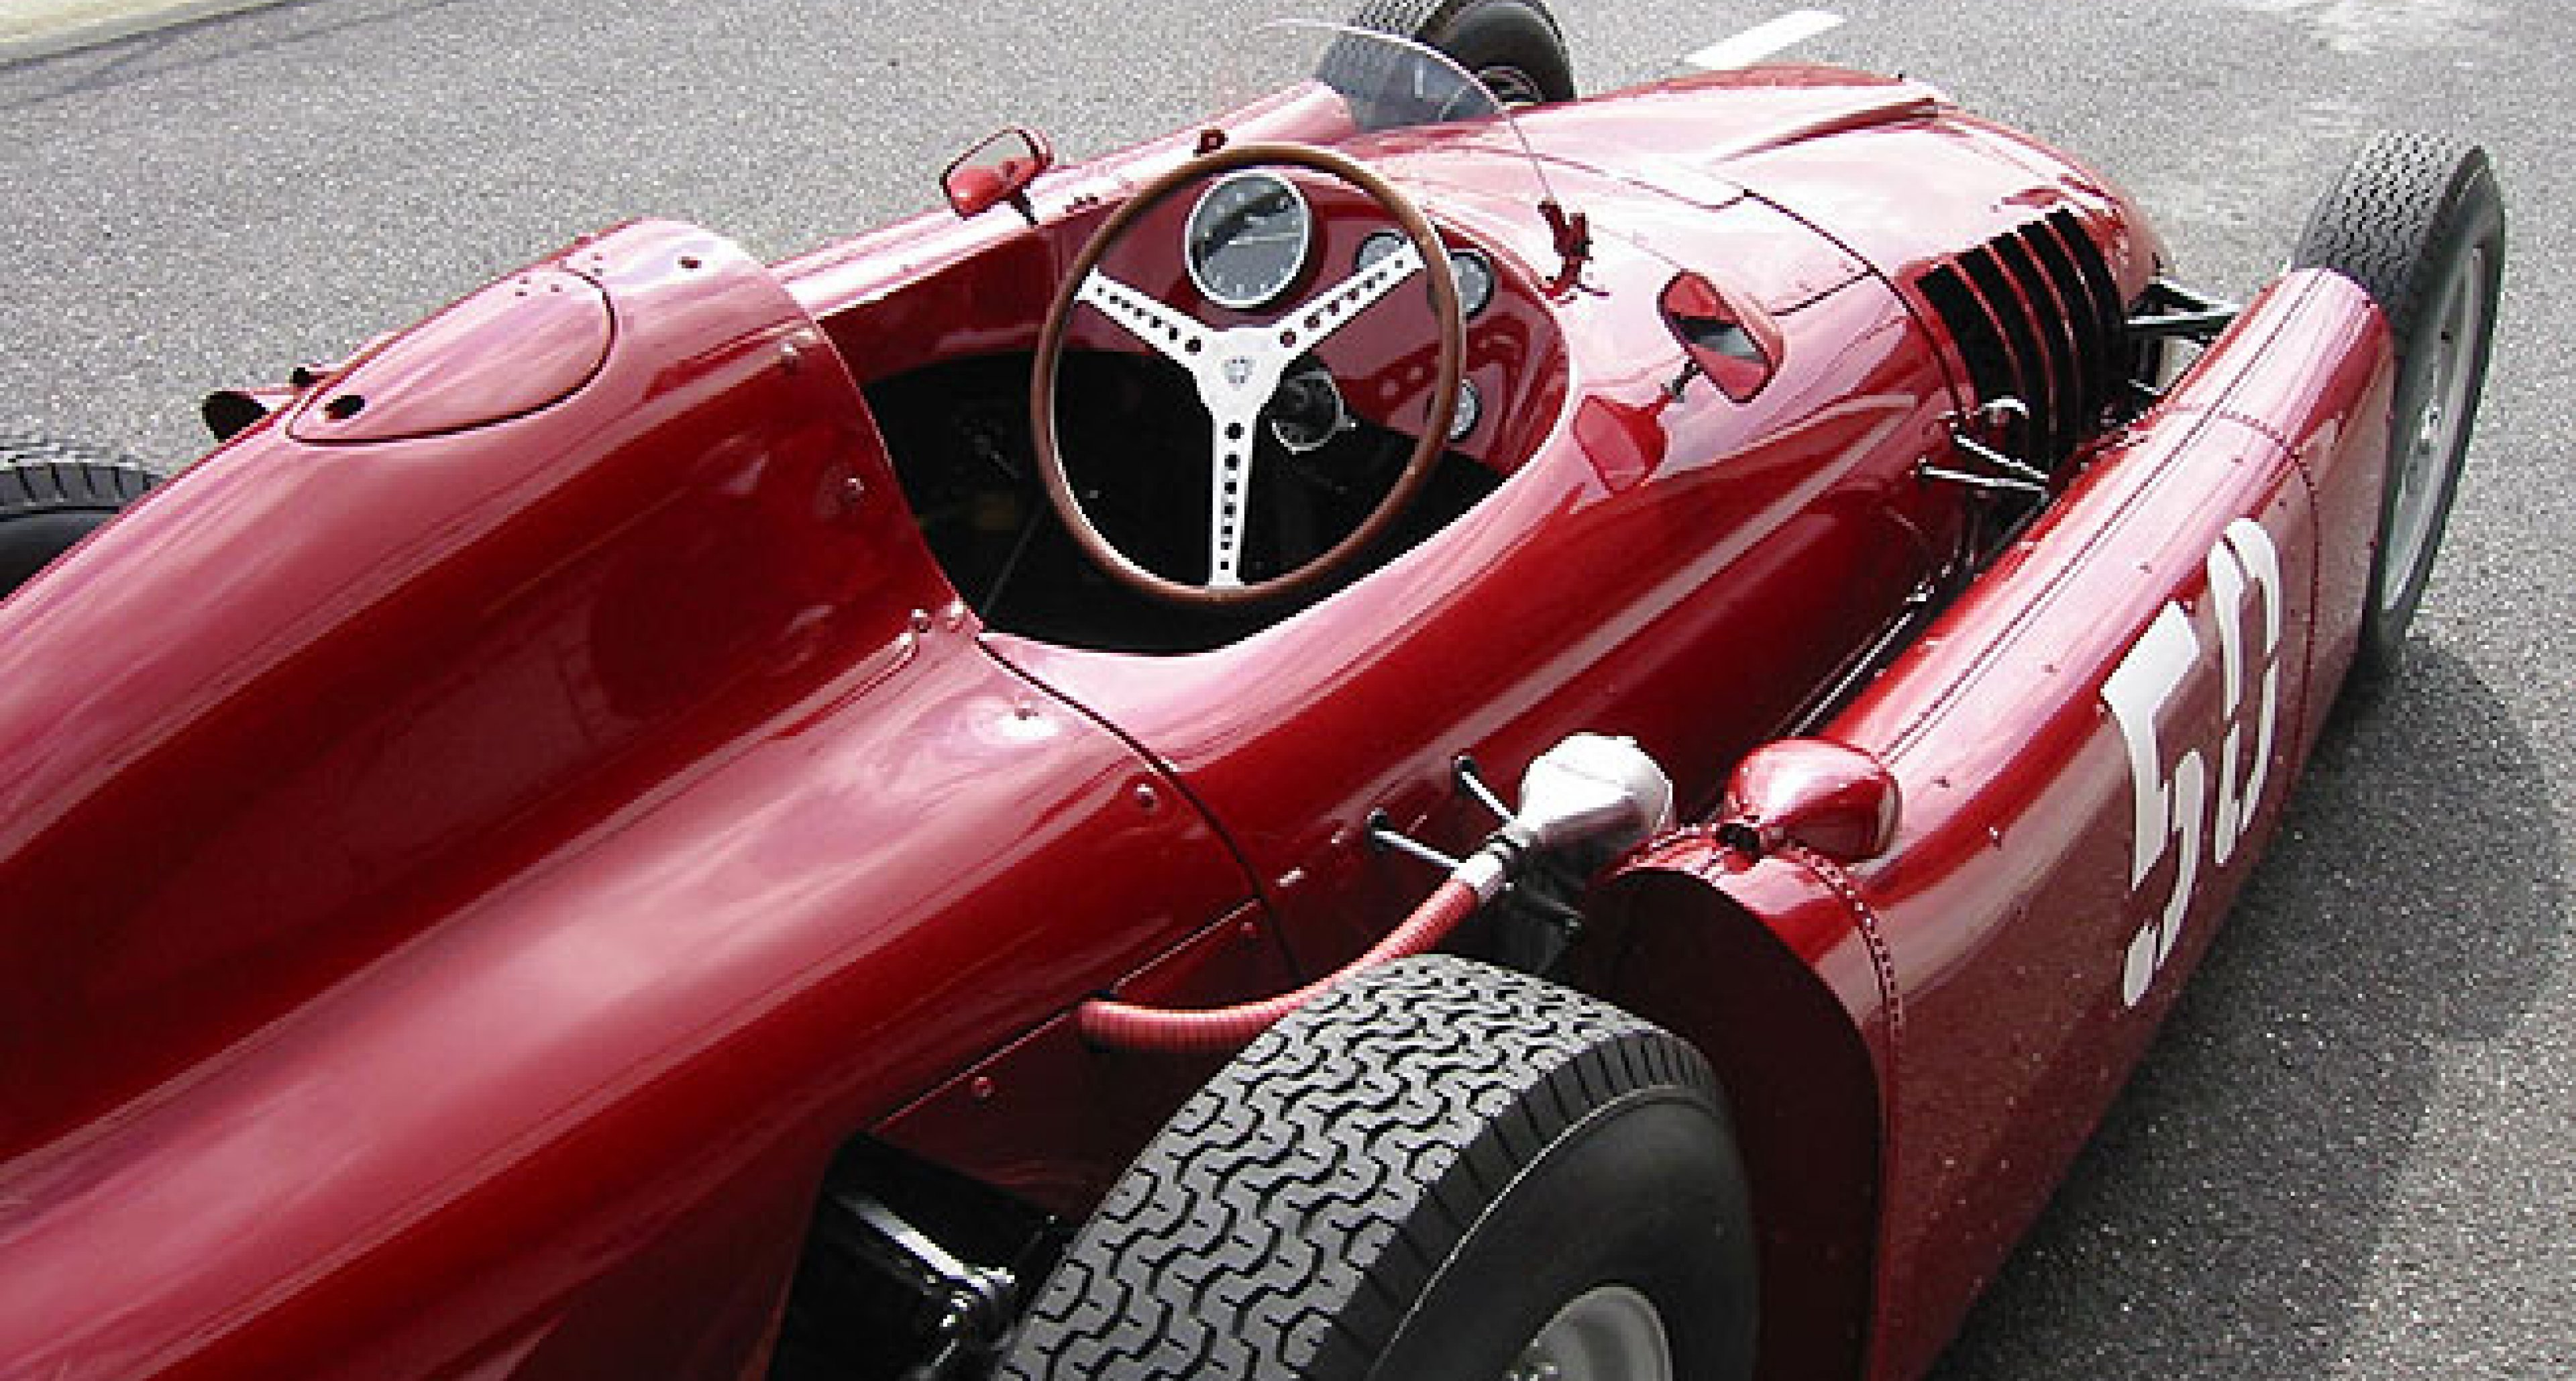 Recreation of the Lancia D50 Grand Prix Car